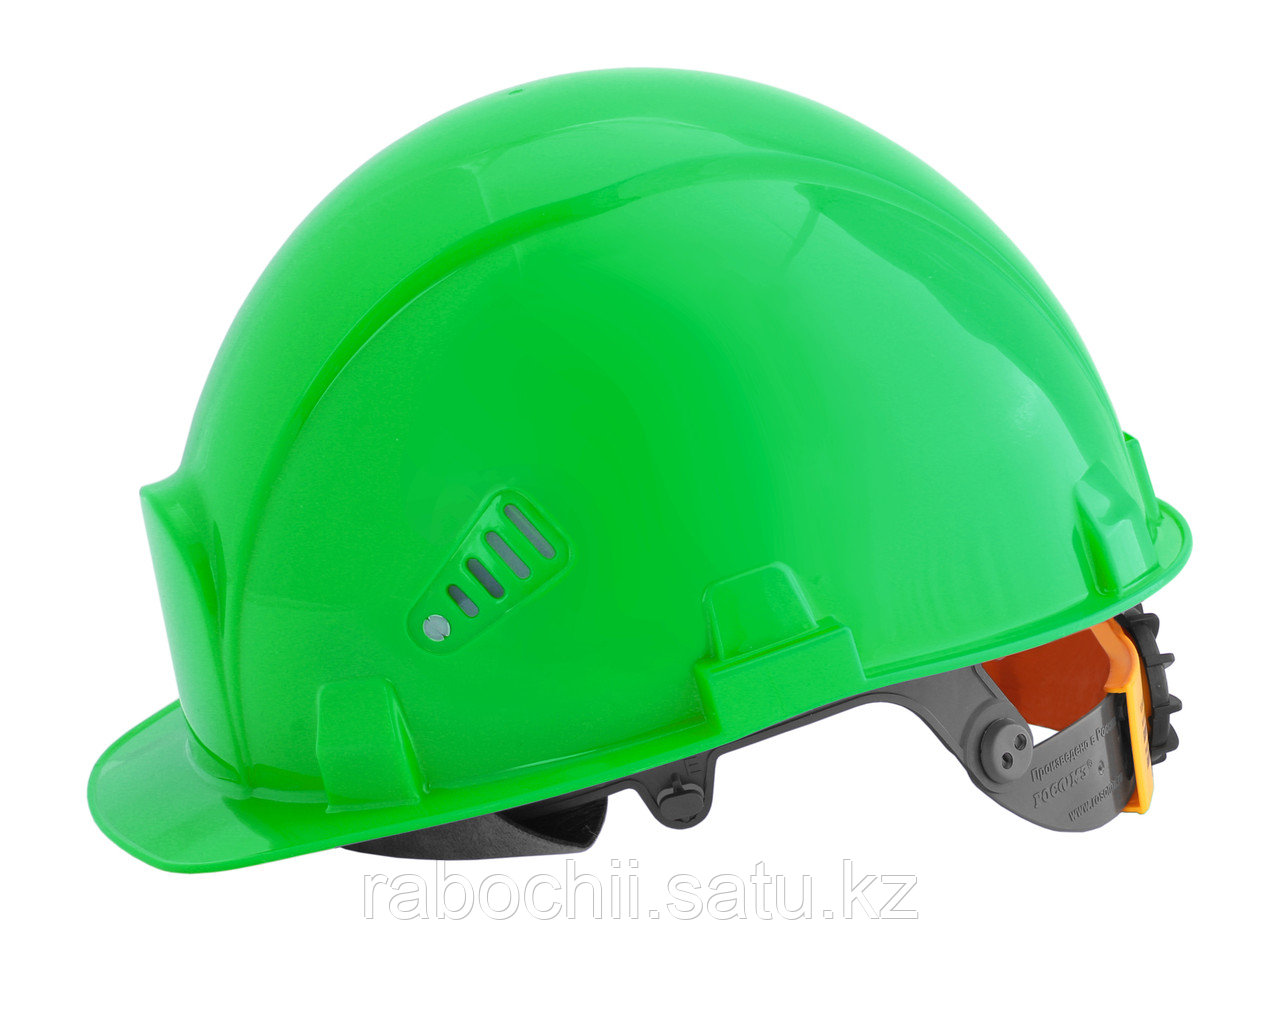 Каска защитная СОМЗ-55 Визион® Rapid  зеленый